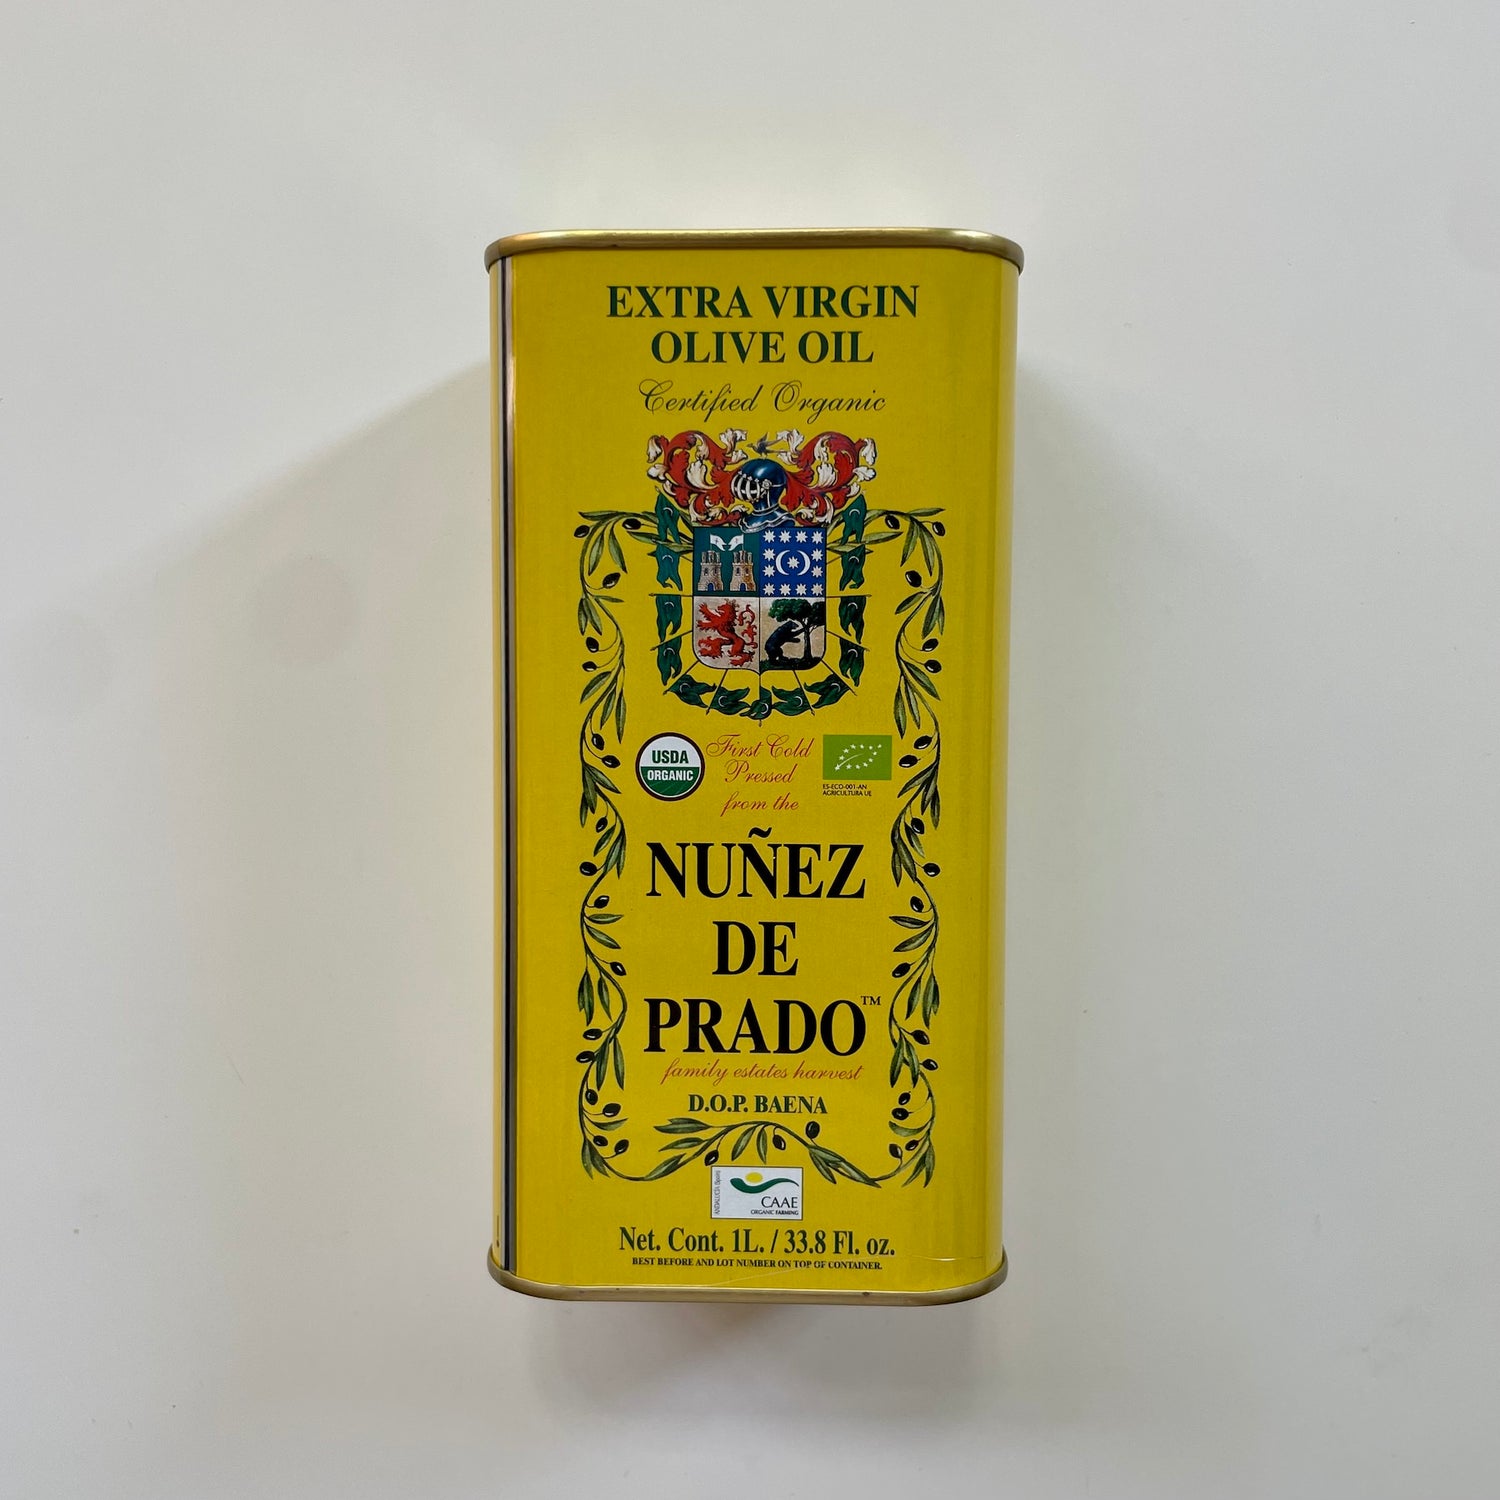 Nunez de Prado Olive Oil